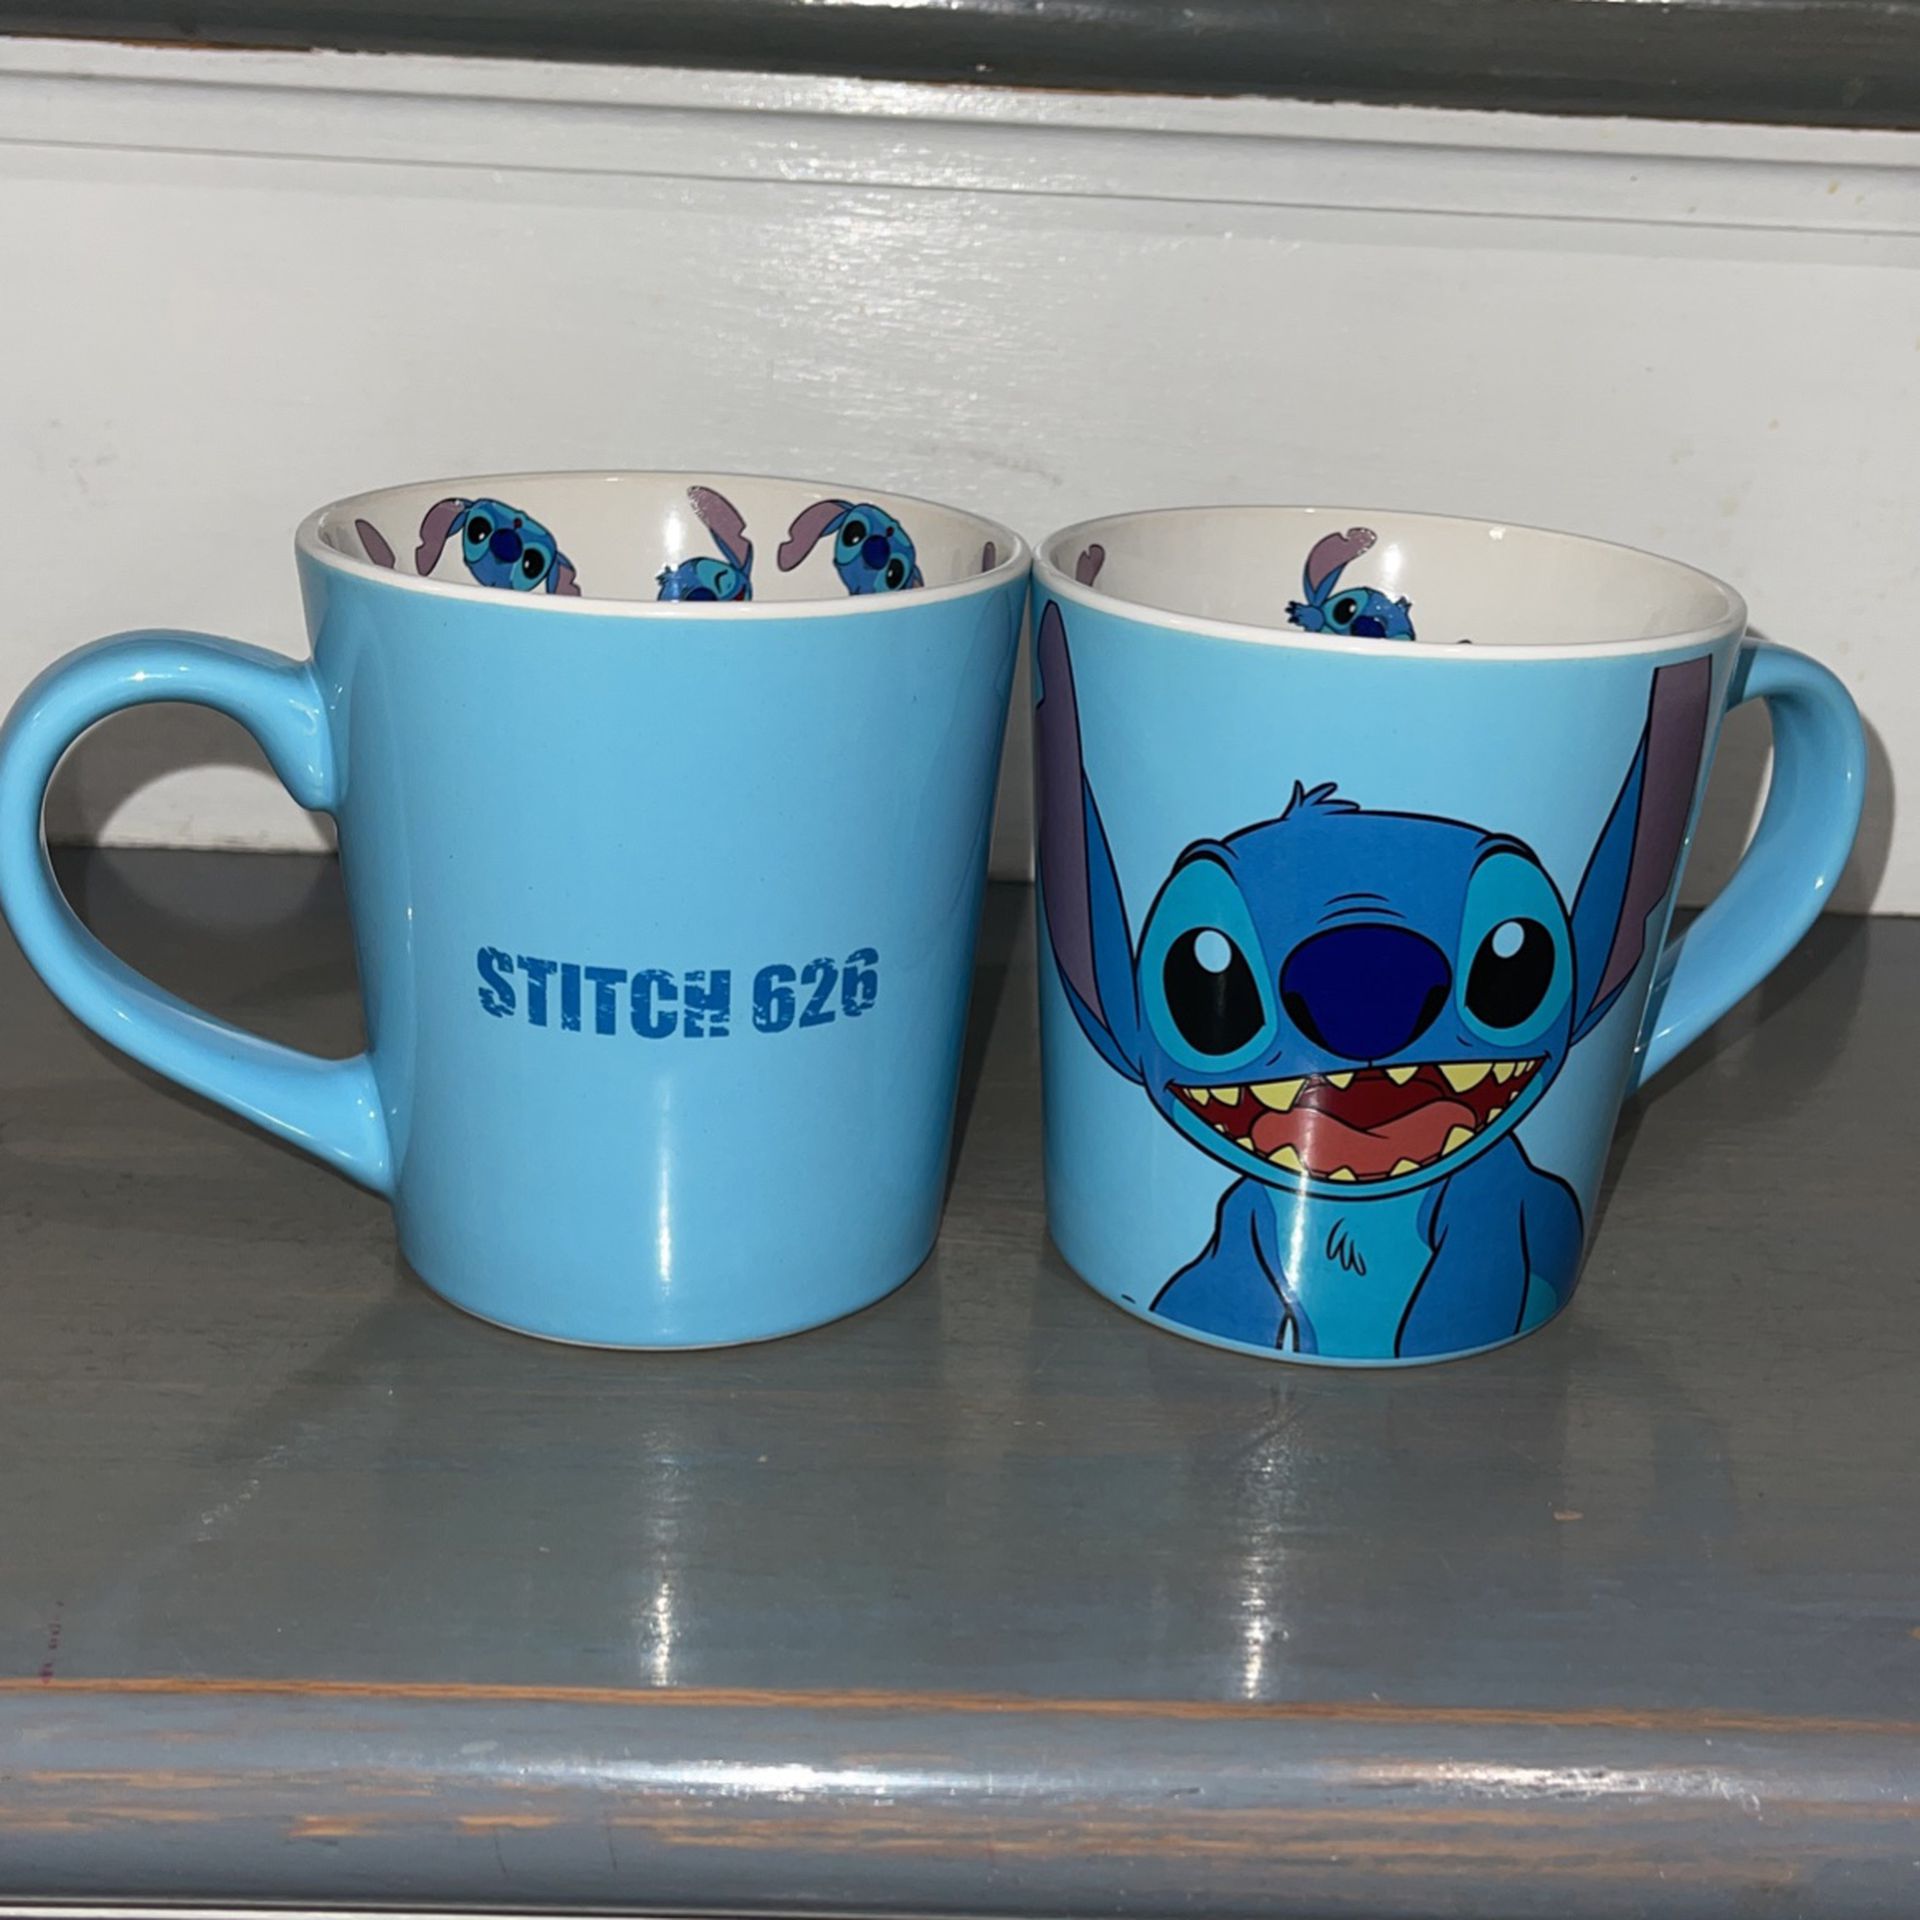 Disney Stitch 626 Mug With Stitch On Outside & Inside The Mug